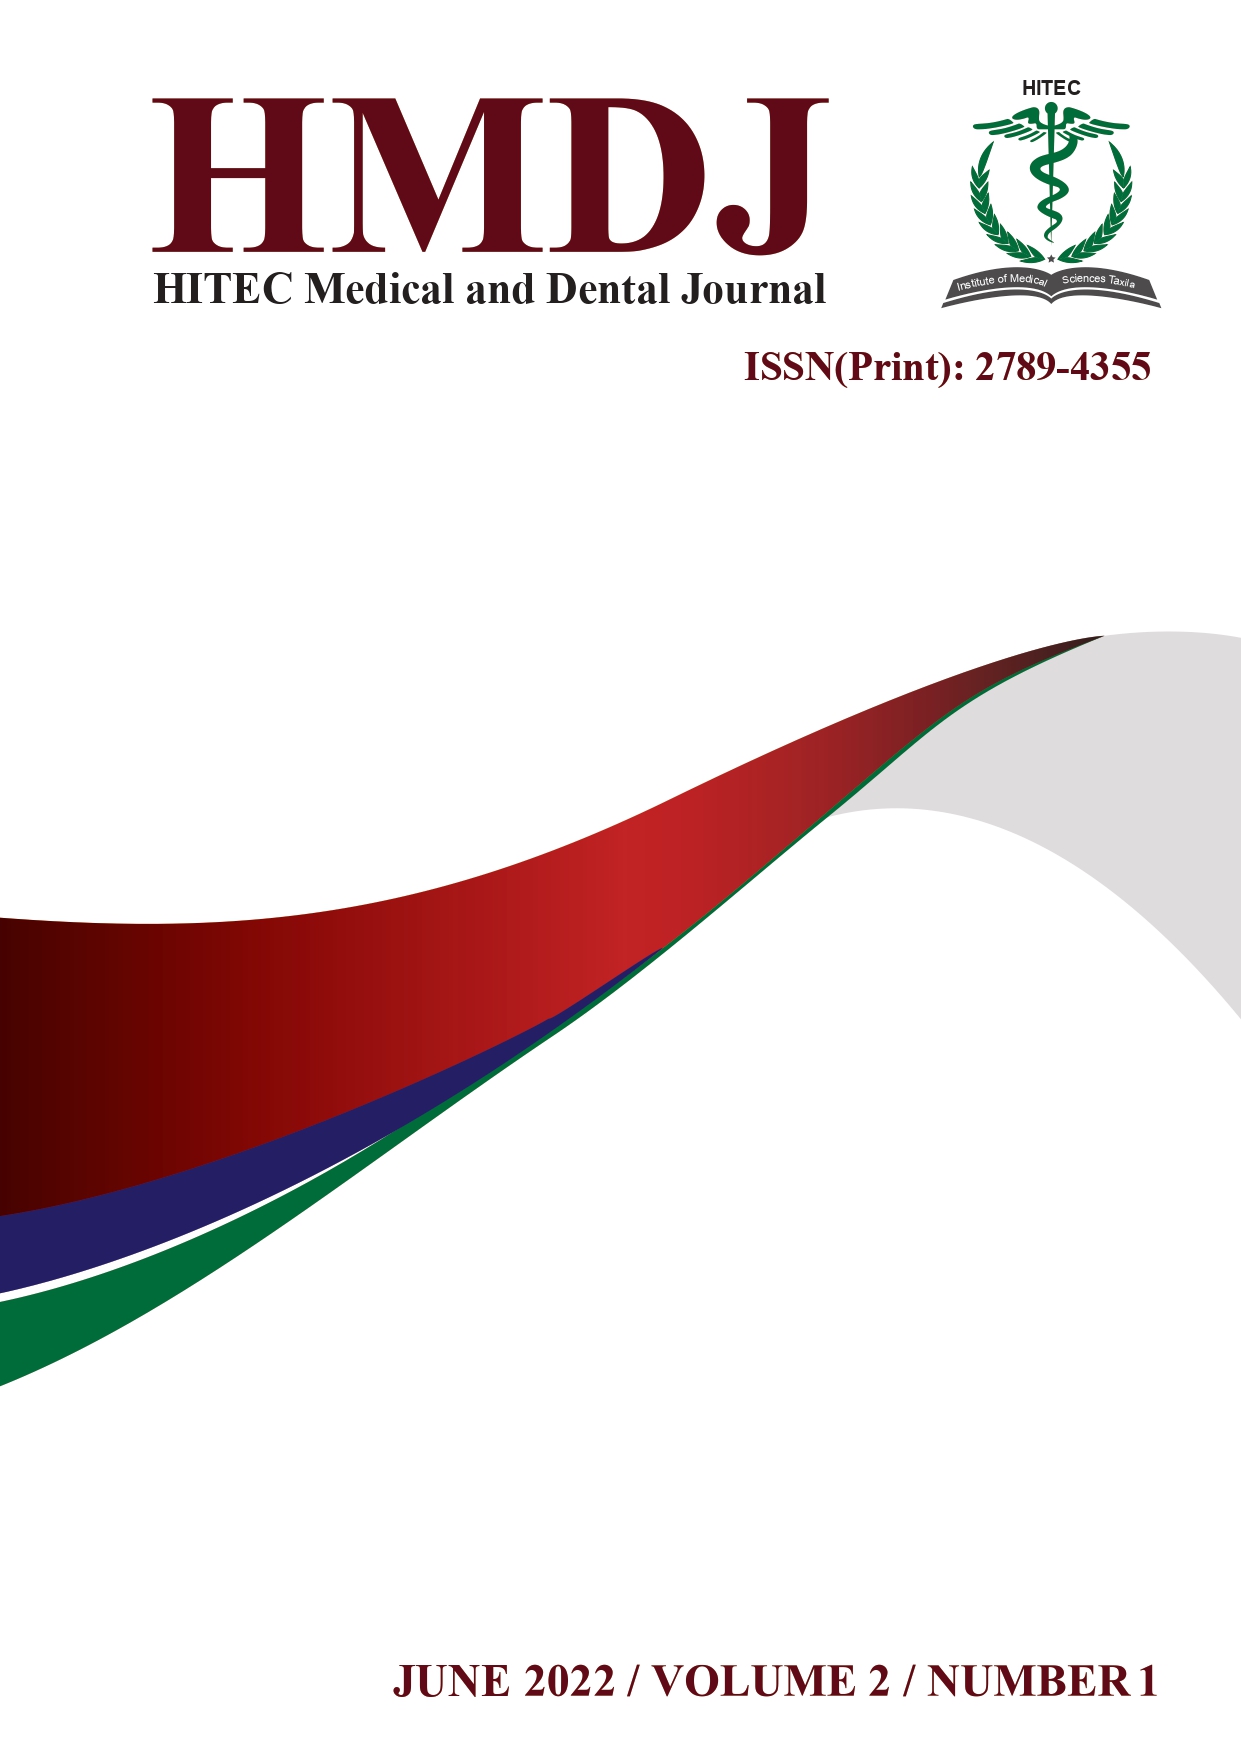 					View Vol. 2 No. 1 (2022): HITEC Medical and Dental Journal 
				